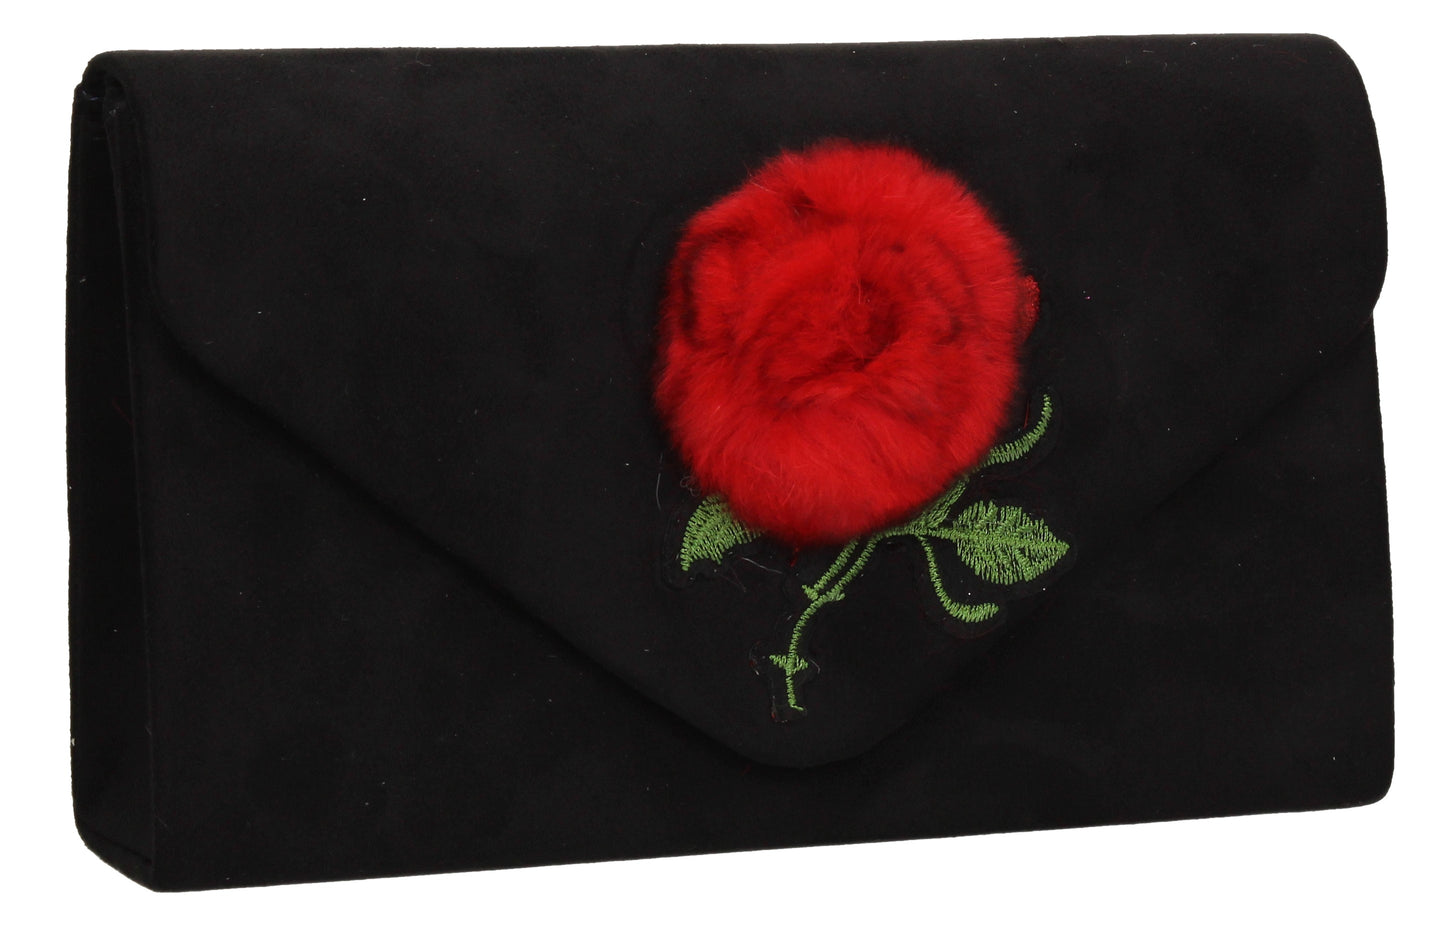 SWANKYSWANS Roxanne Fur Rose Clutch Bag Black Cute Cheap Clutch Bag For Weddings School and Work